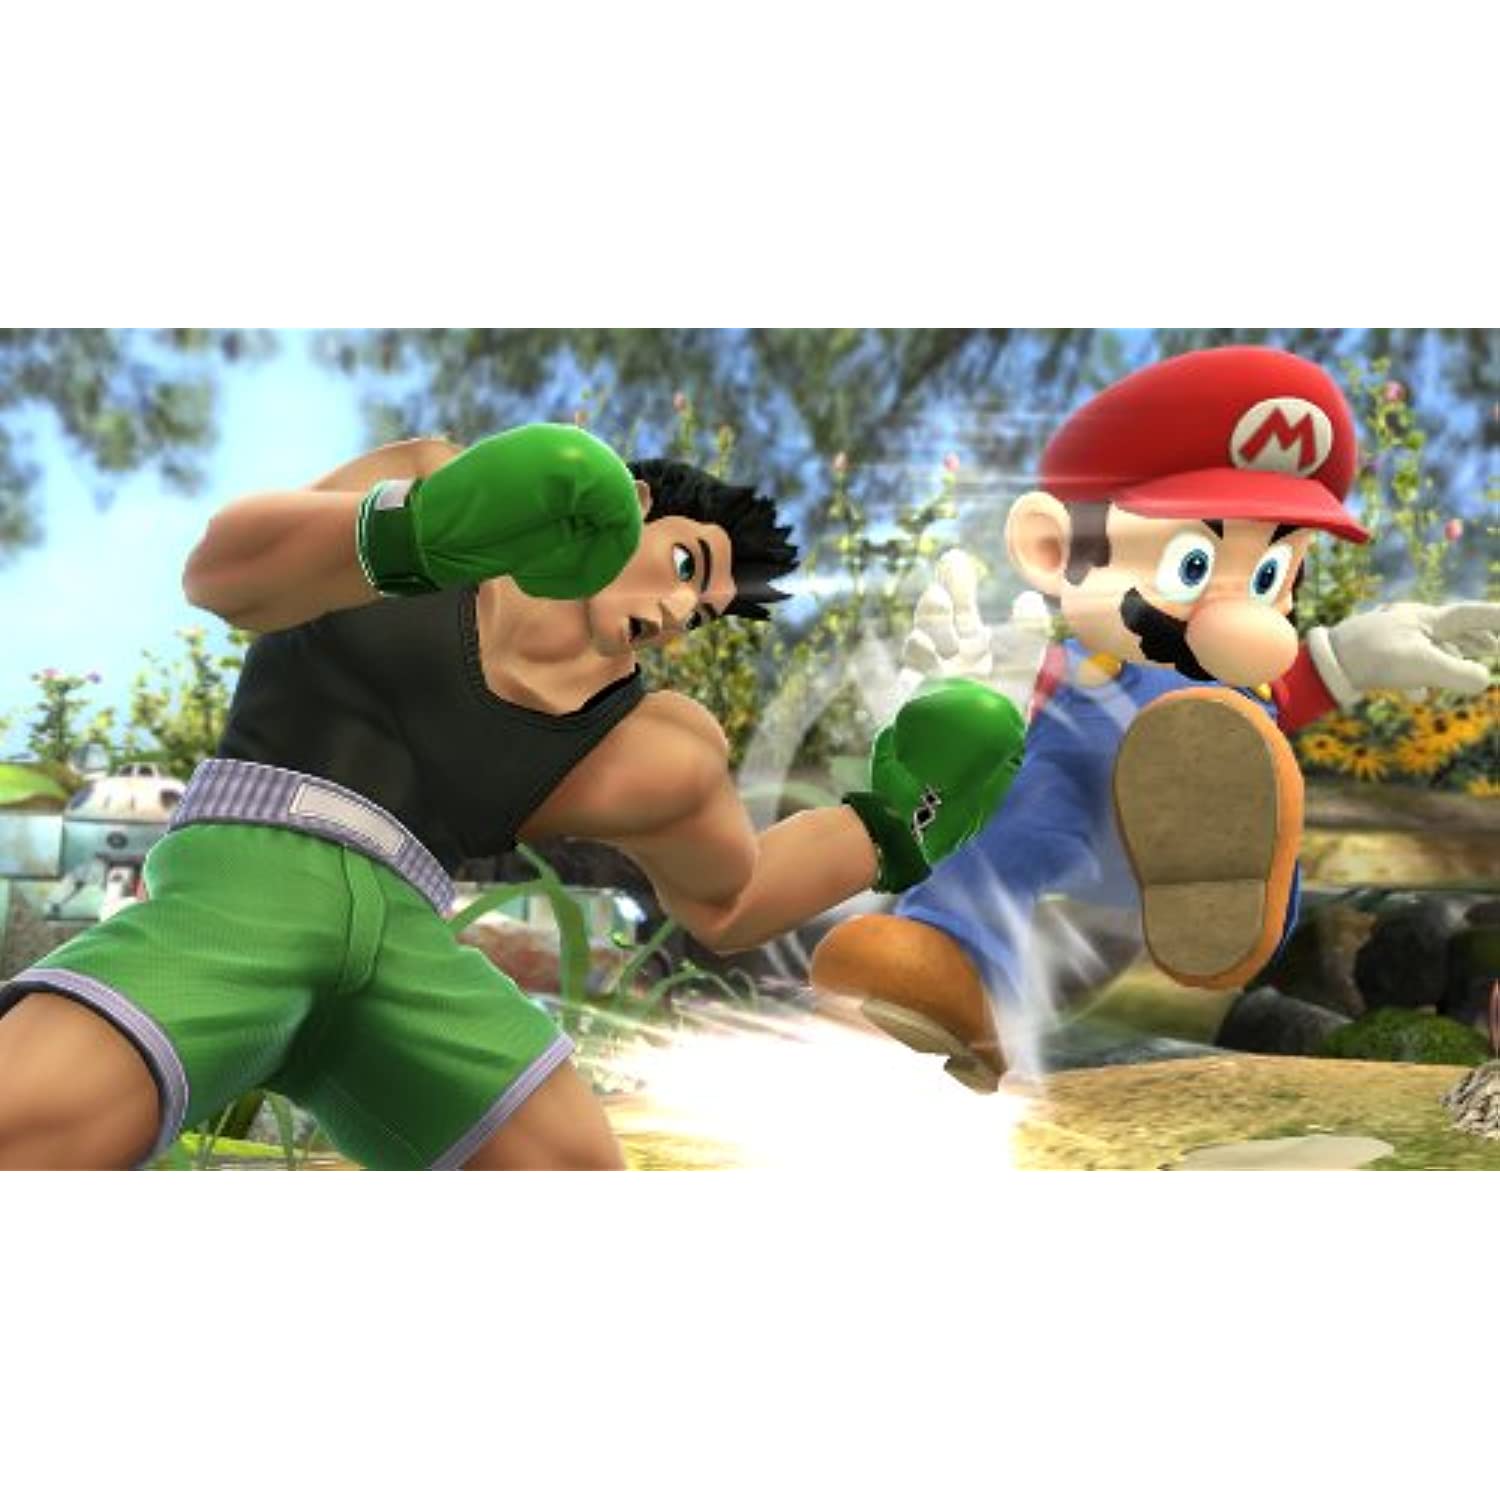 Super Smash Bros (Nintendo Wii U) - image 3 of 3